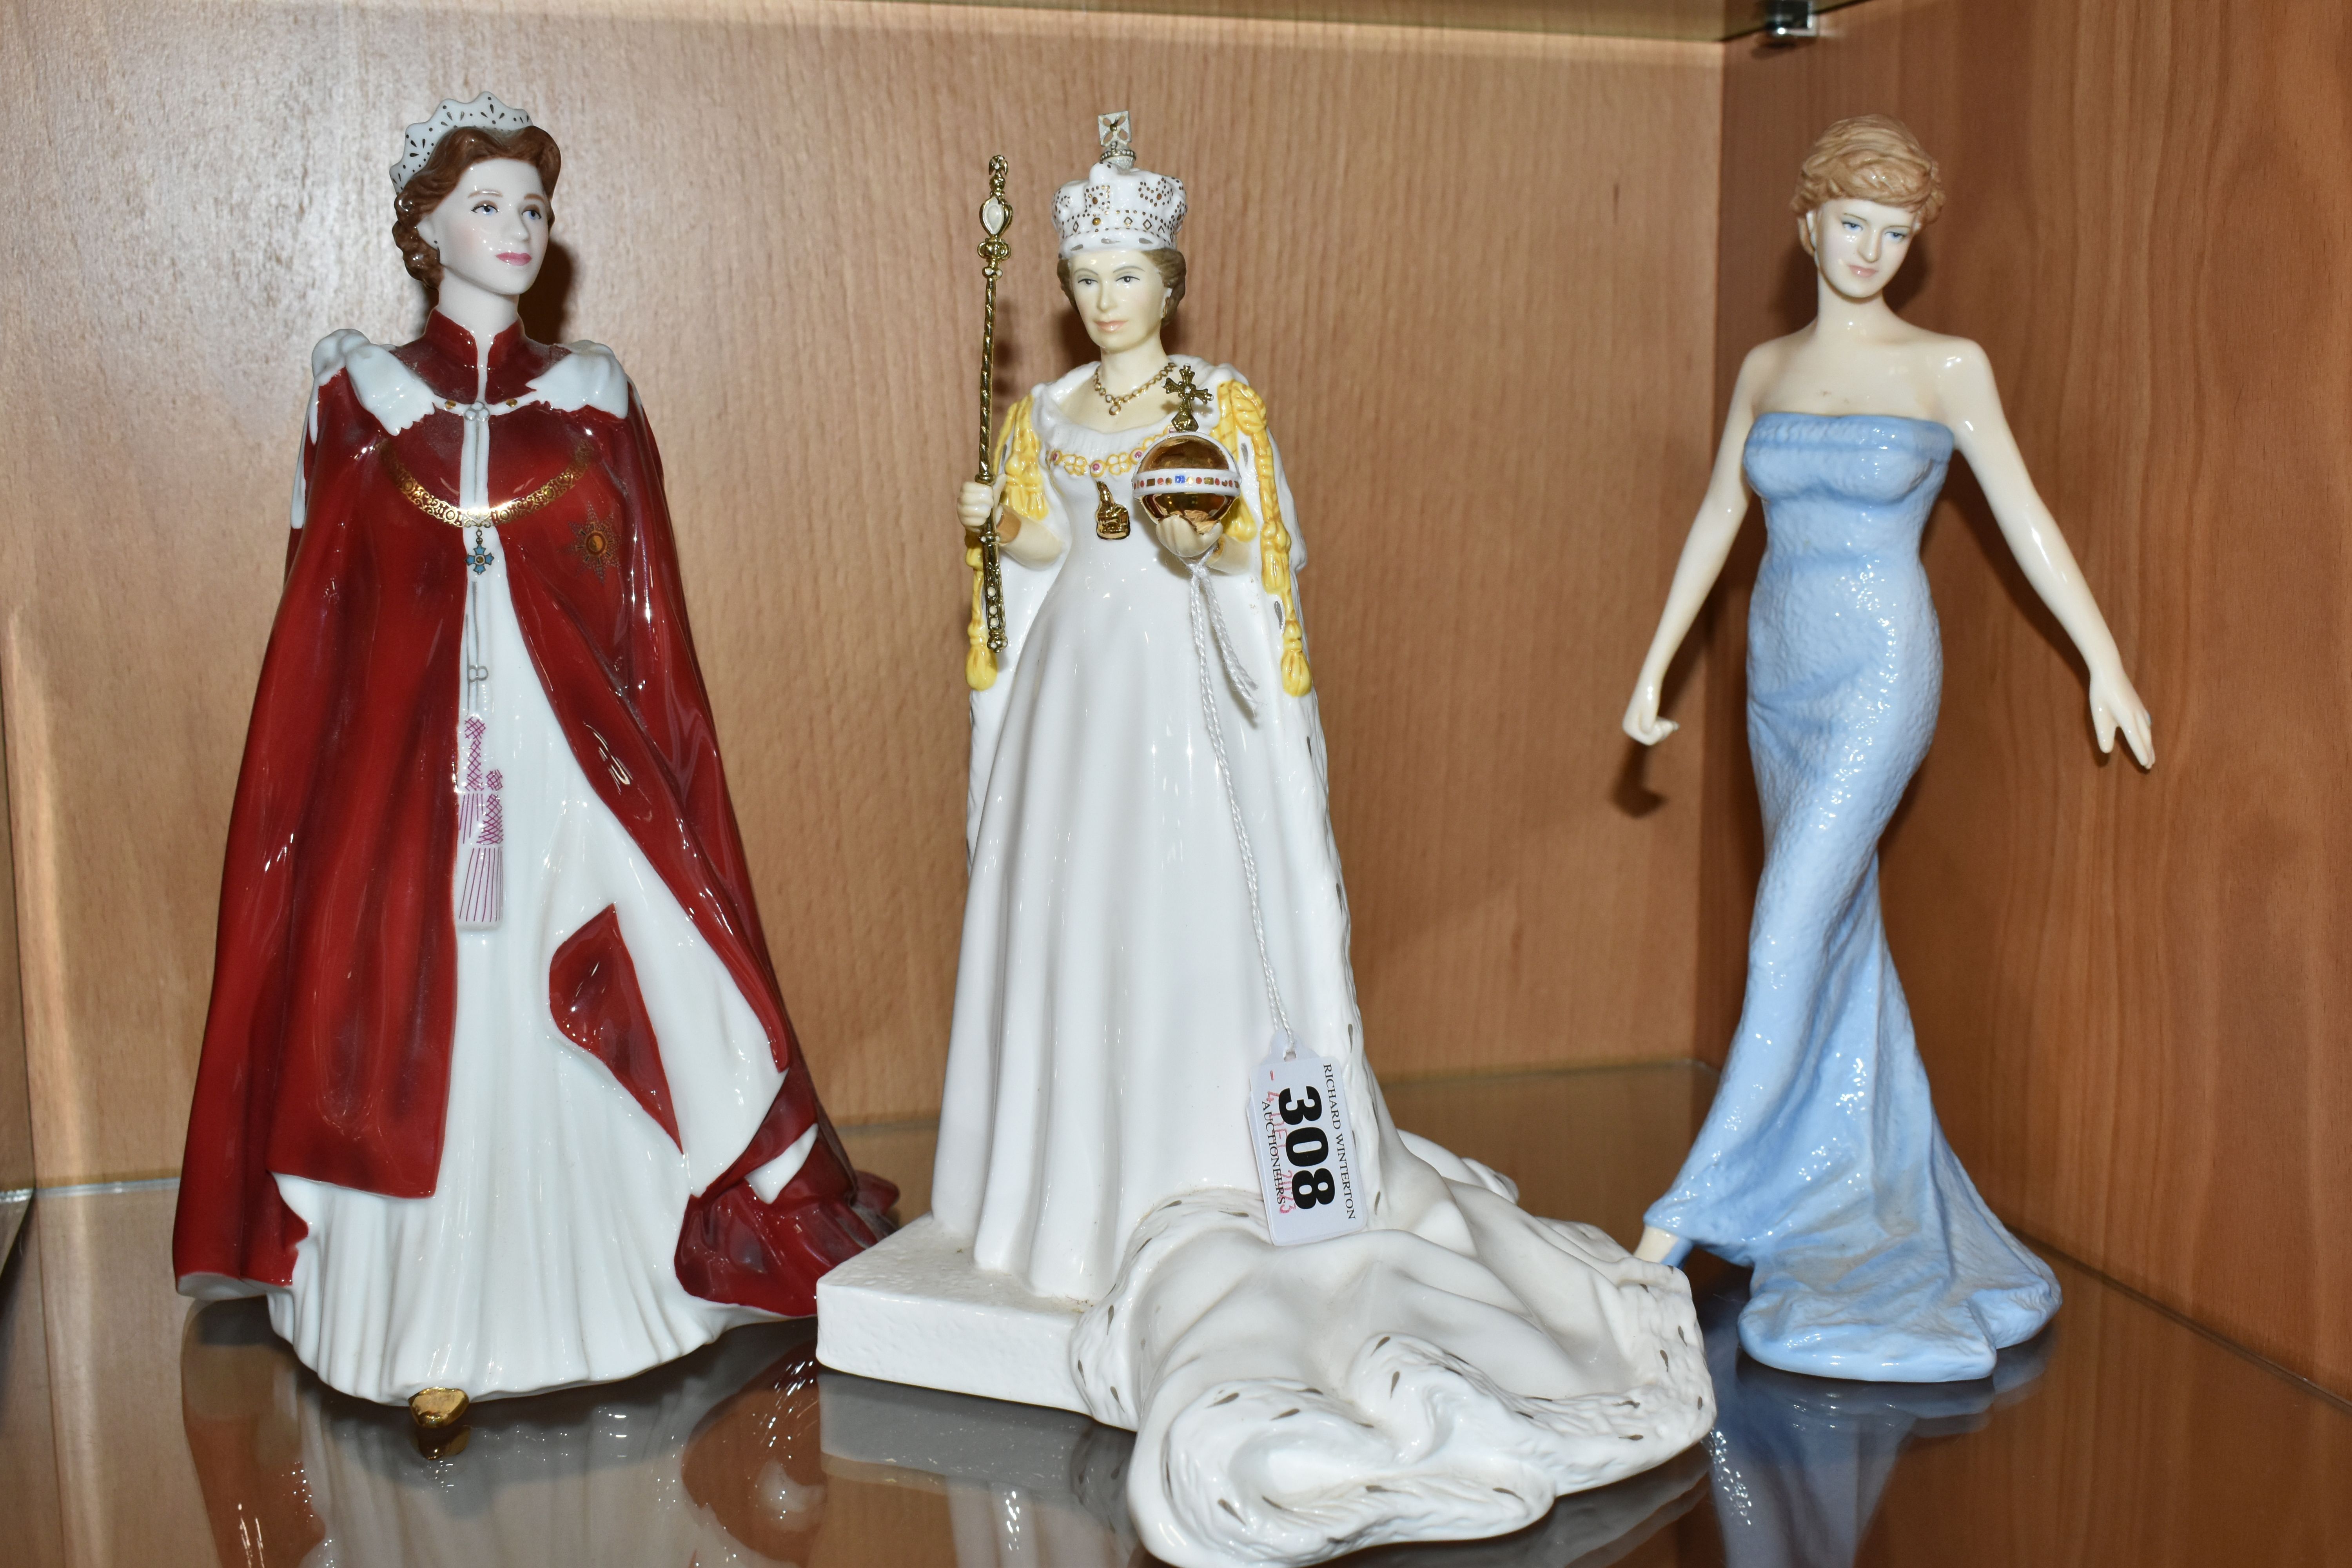 THREE ROYAL FIGURINES, comprising a Coalport figurine of Queen Elizabeth II at her coronation,